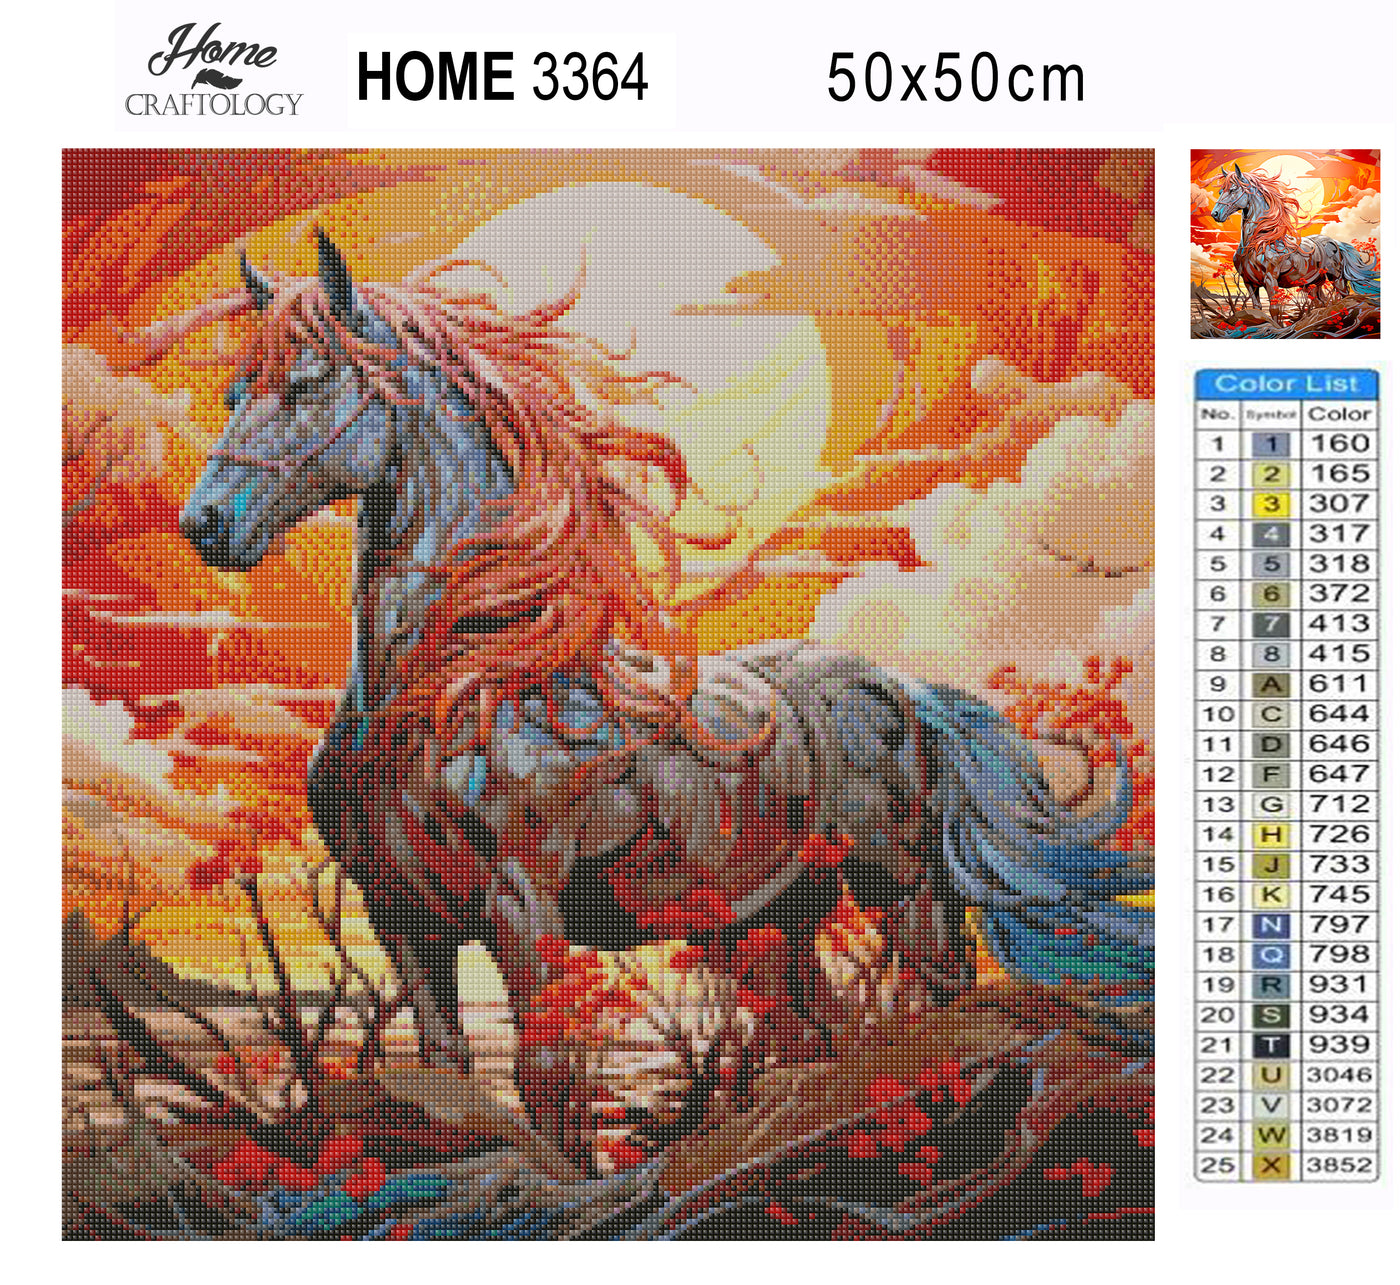 Red Horse - Premium Diamond Painting Kit